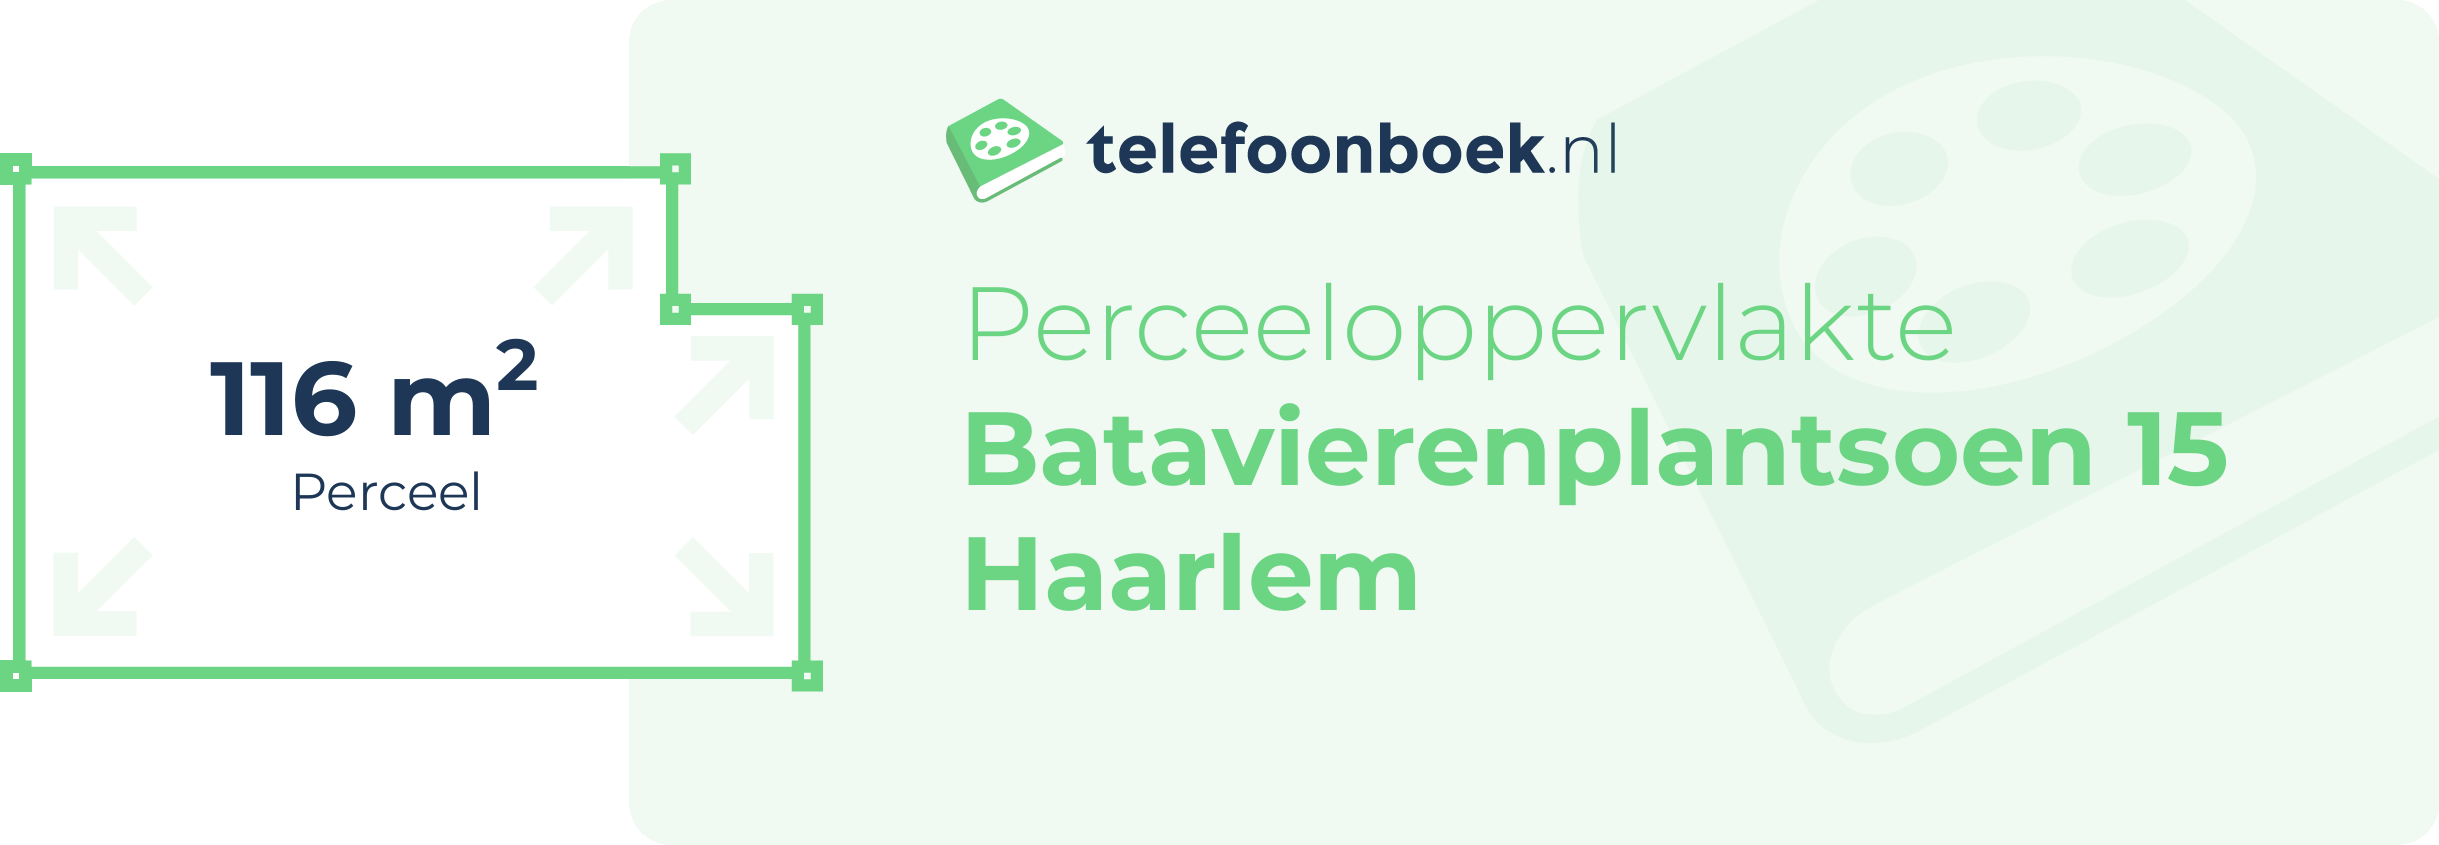 Perceeloppervlakte Batavierenplantsoen 15 Haarlem